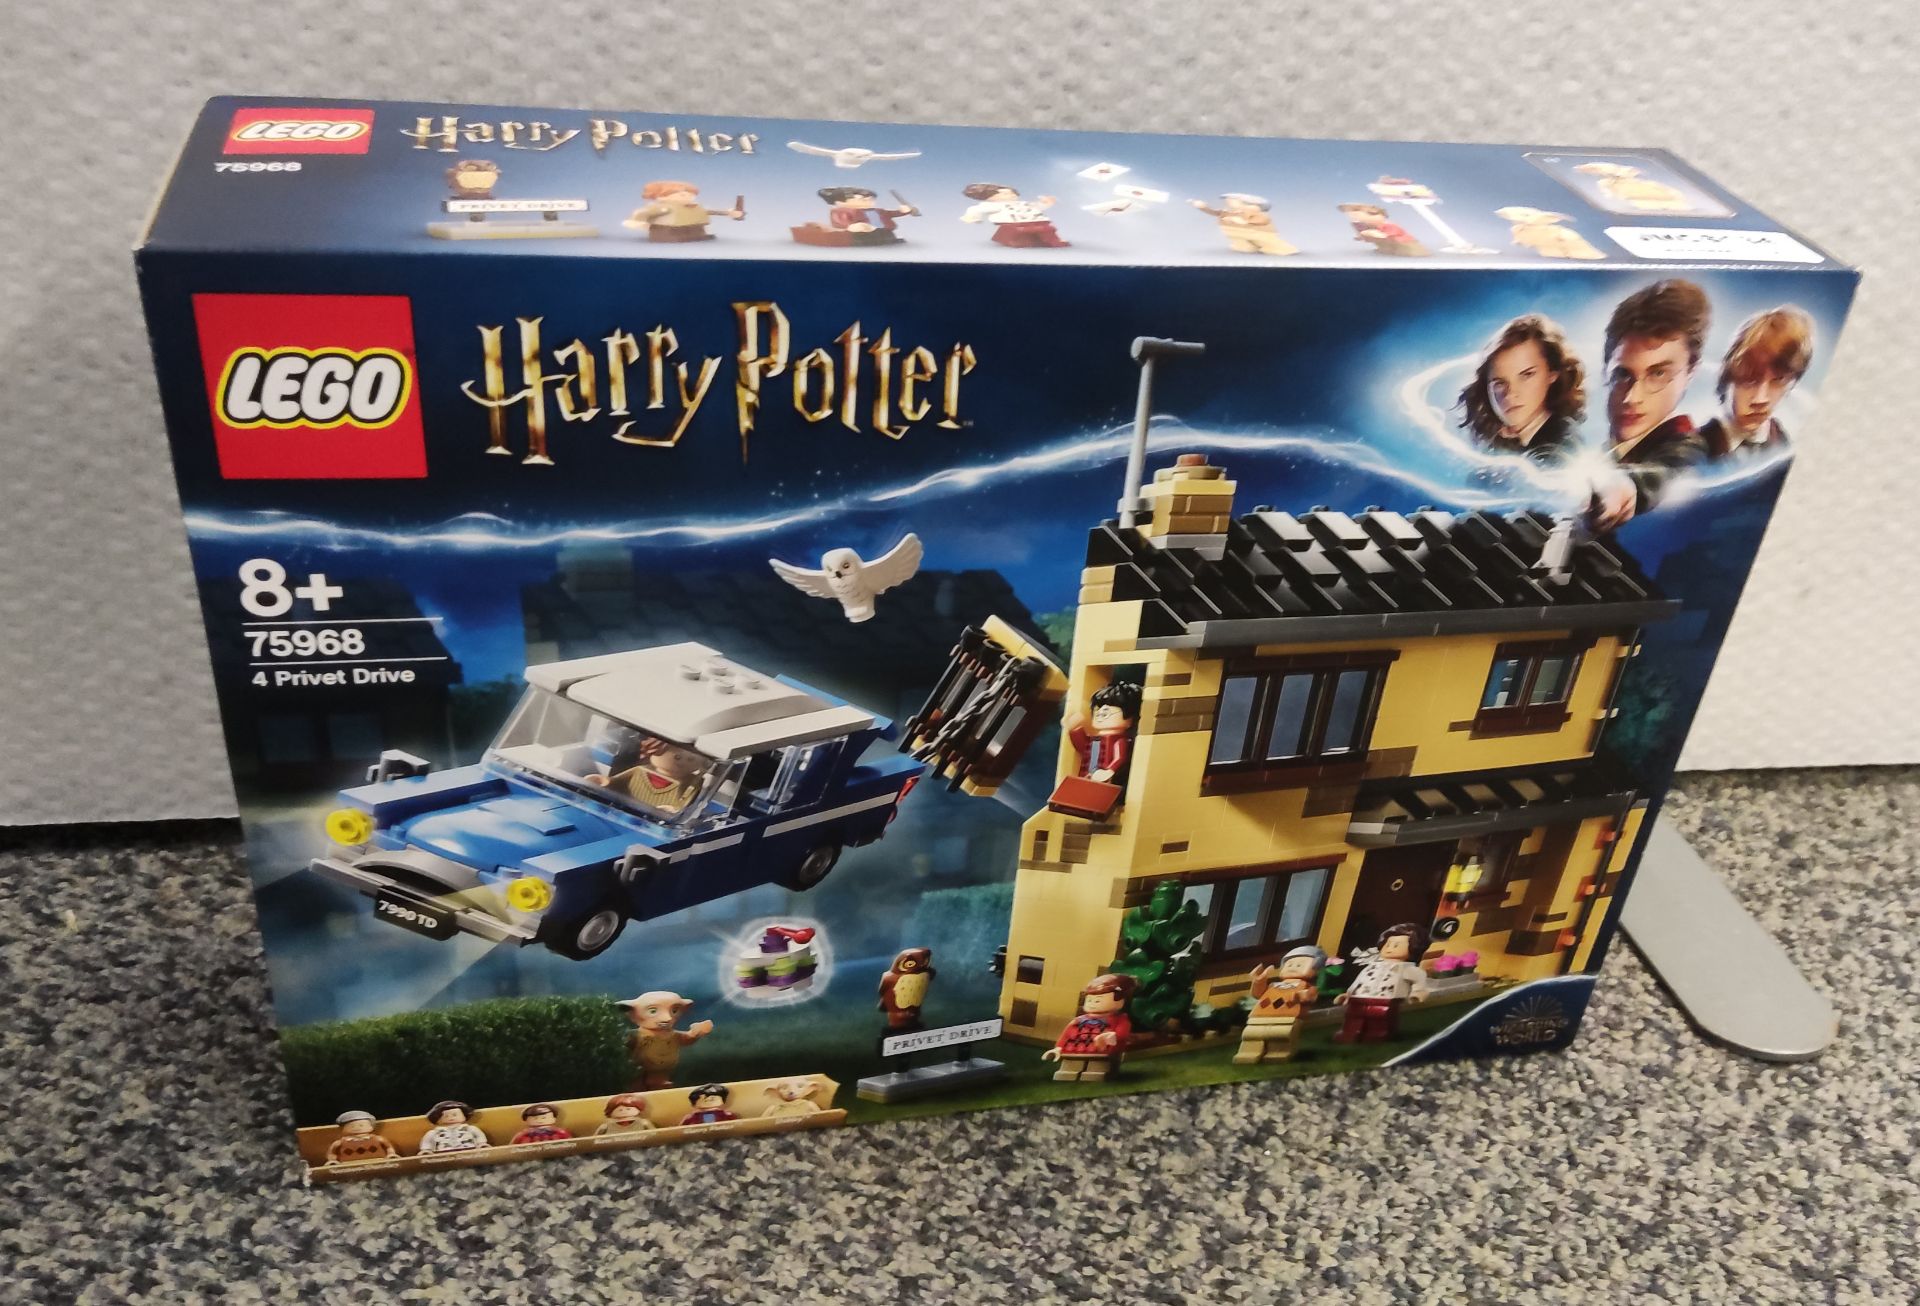 1 x Lego Harry Potter 4 Privet Drive - Set # 75968 - New/Boxed - Image 3 of 8